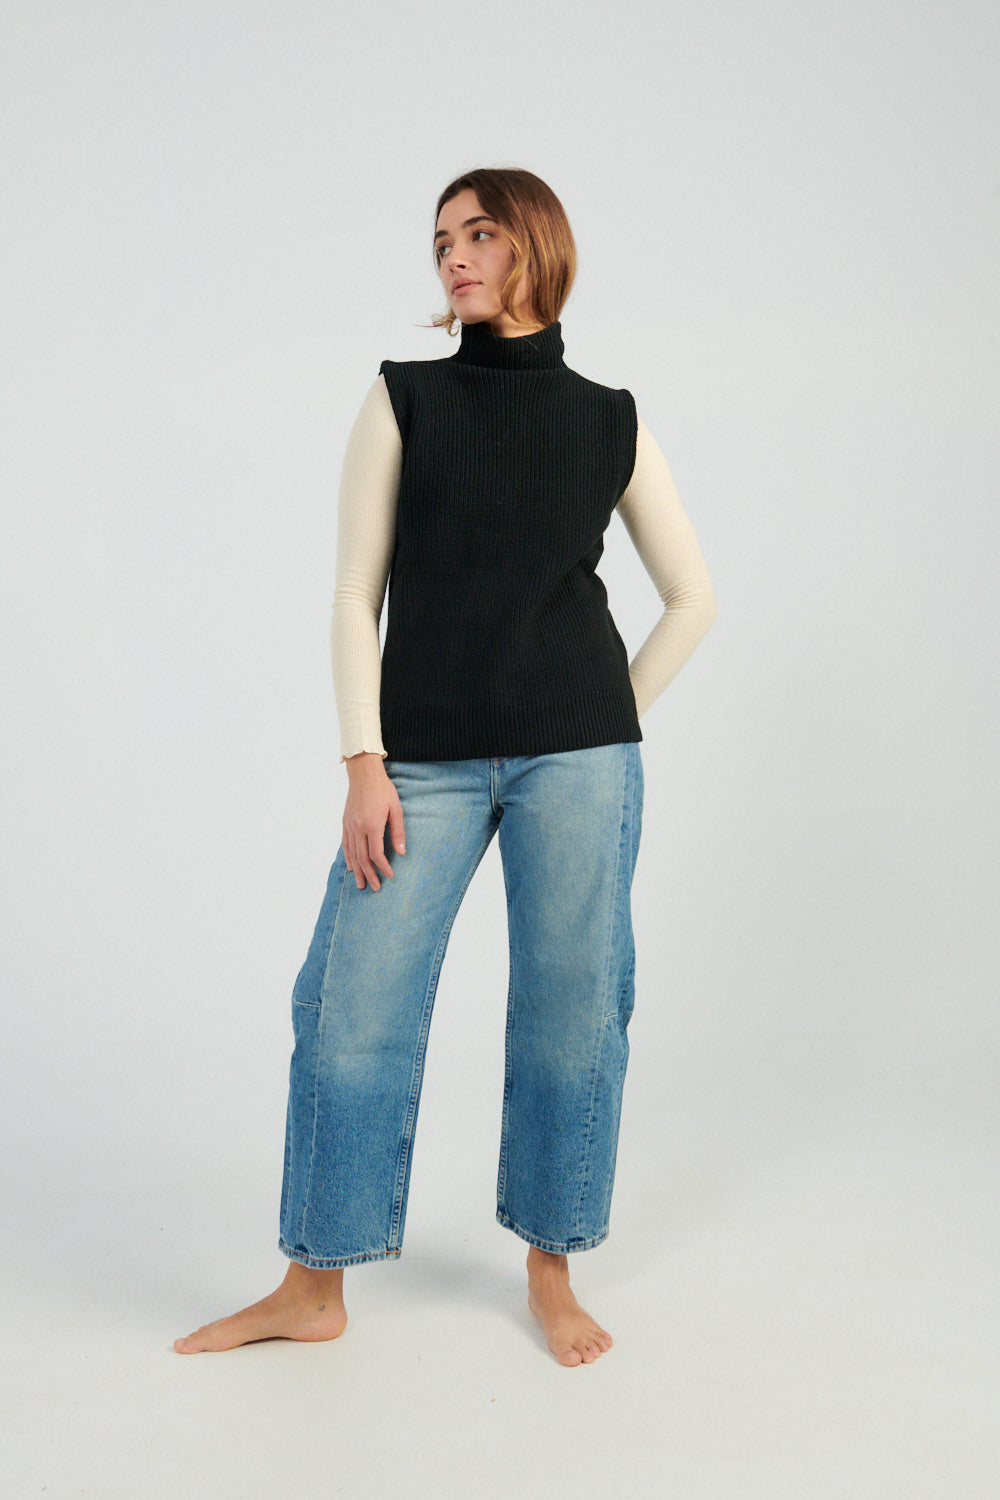 Mara Hoffman Simone Sweater black-Mara Hoffman sleeveless turtleneck tank sweater black-Idun-St. Paul